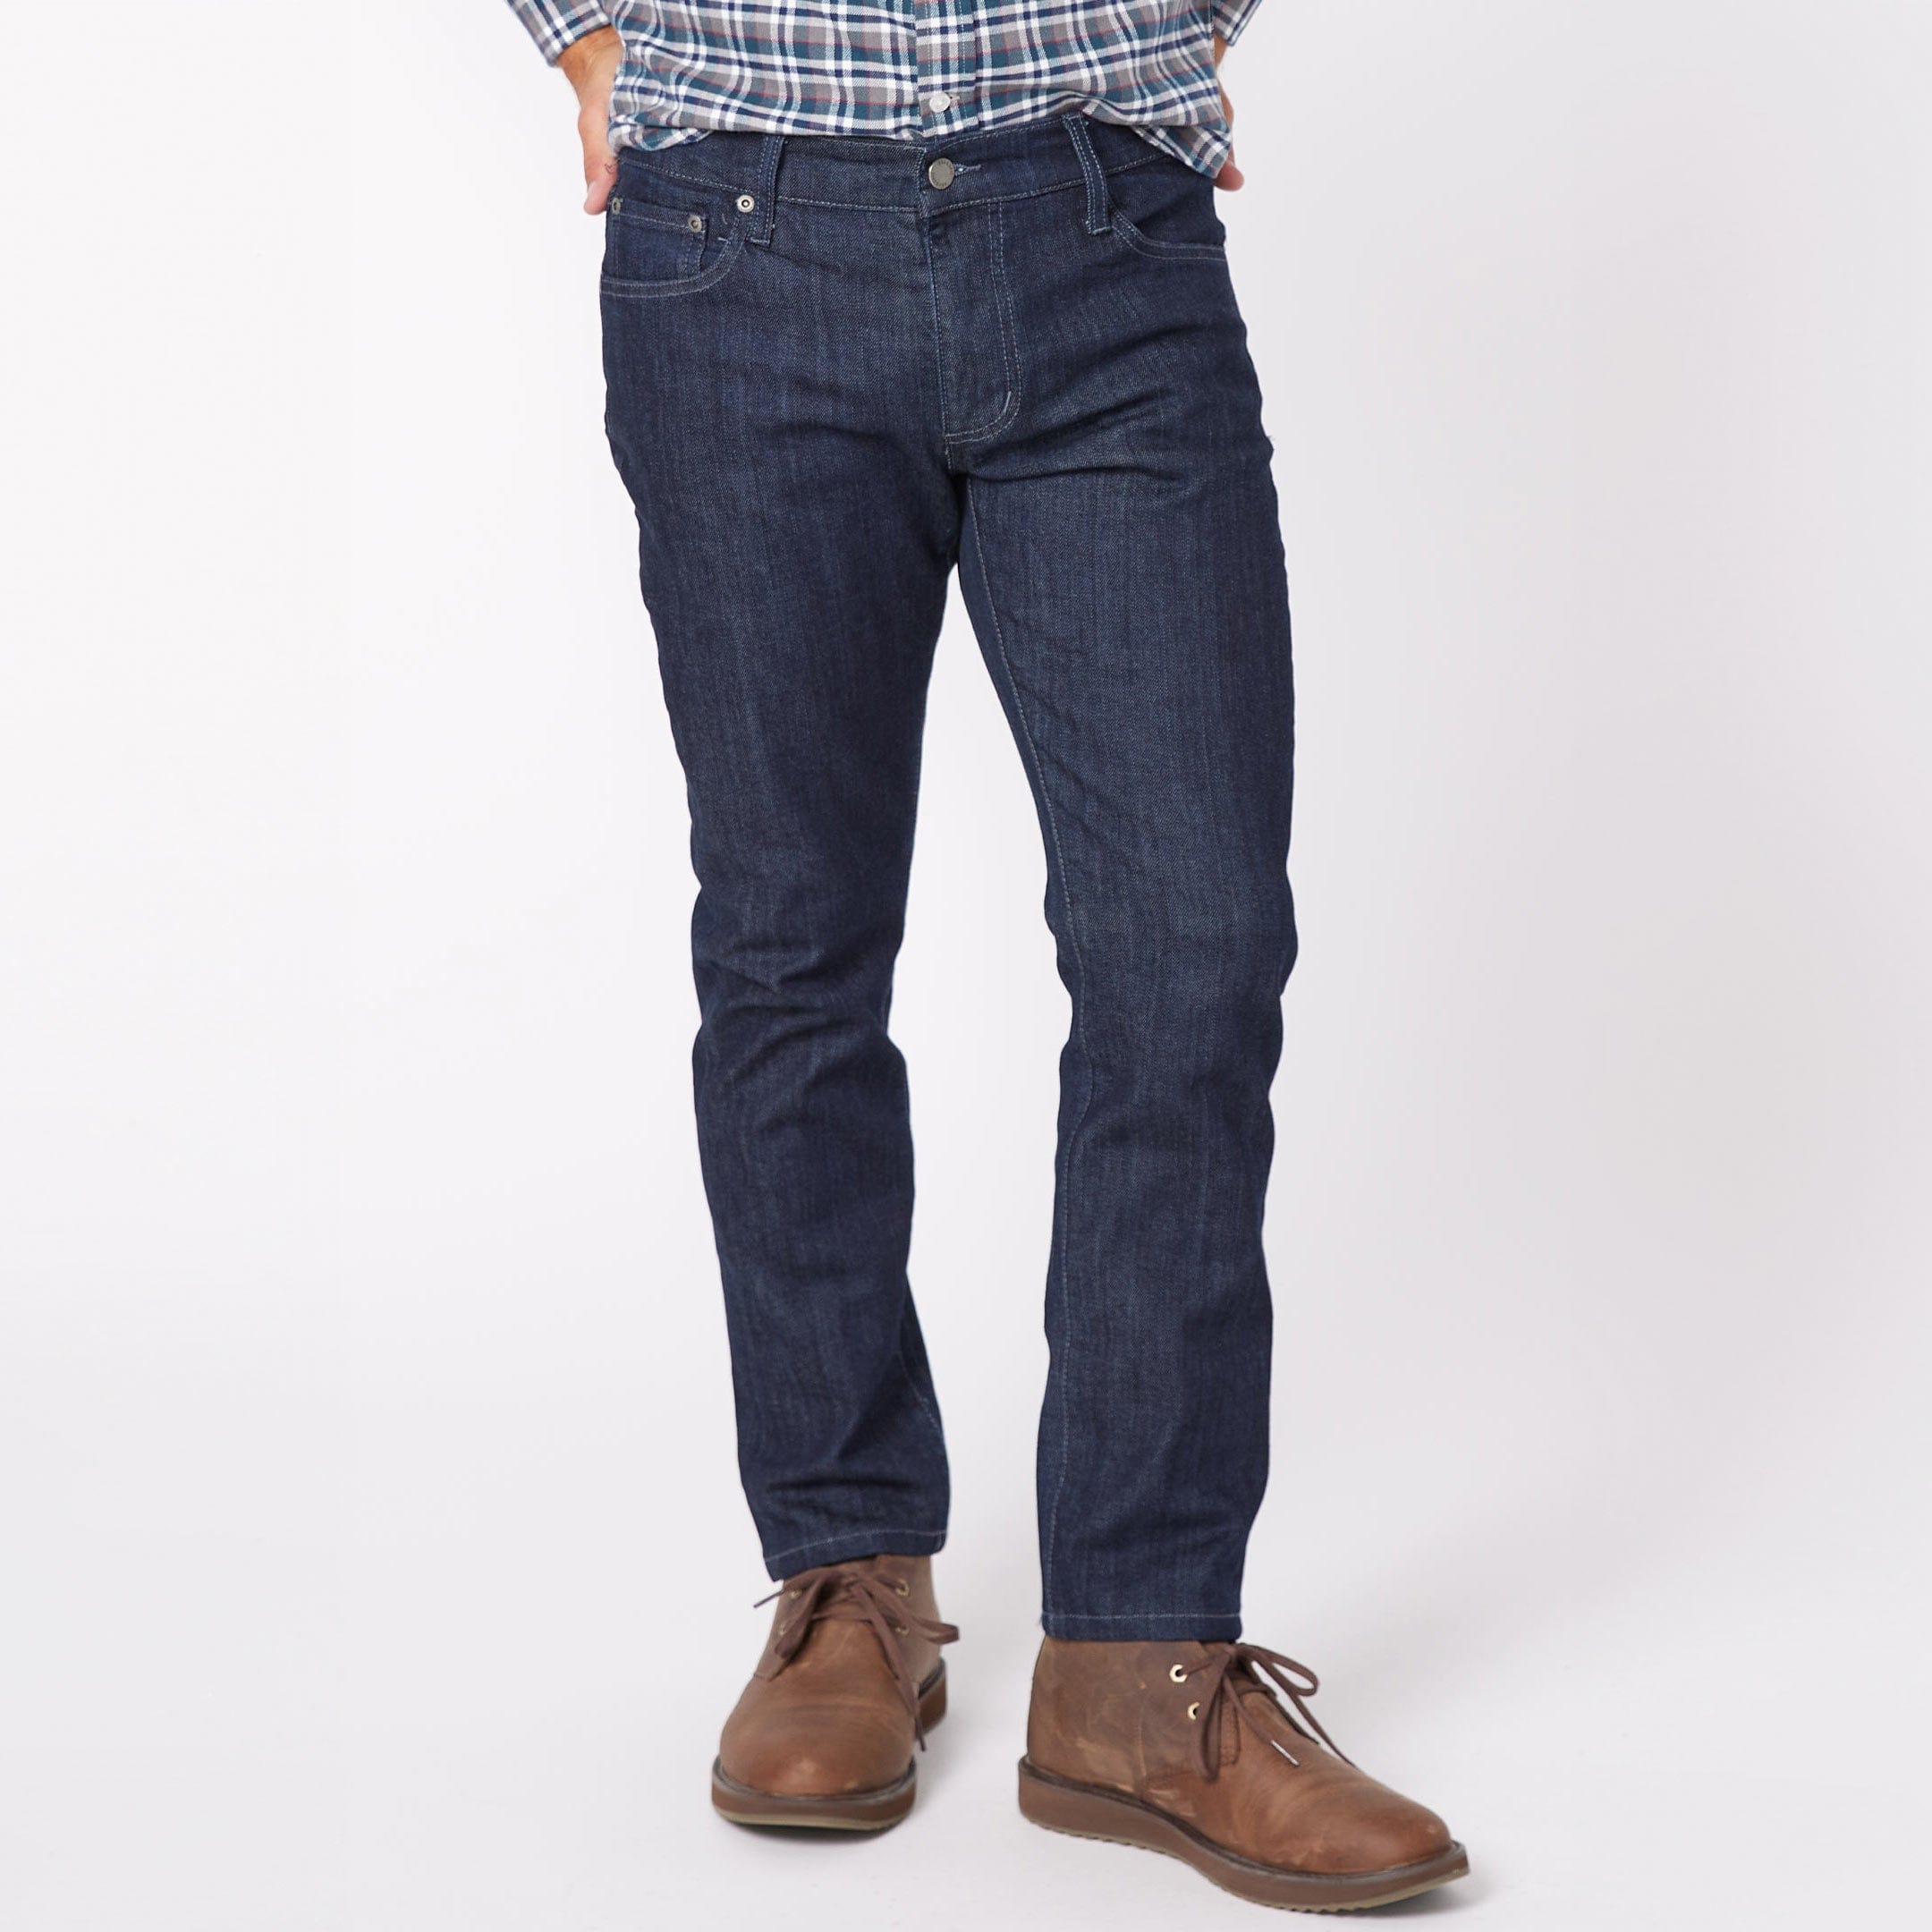 PajamaJeans® for Men - Indigo Wash in Men's Jeans